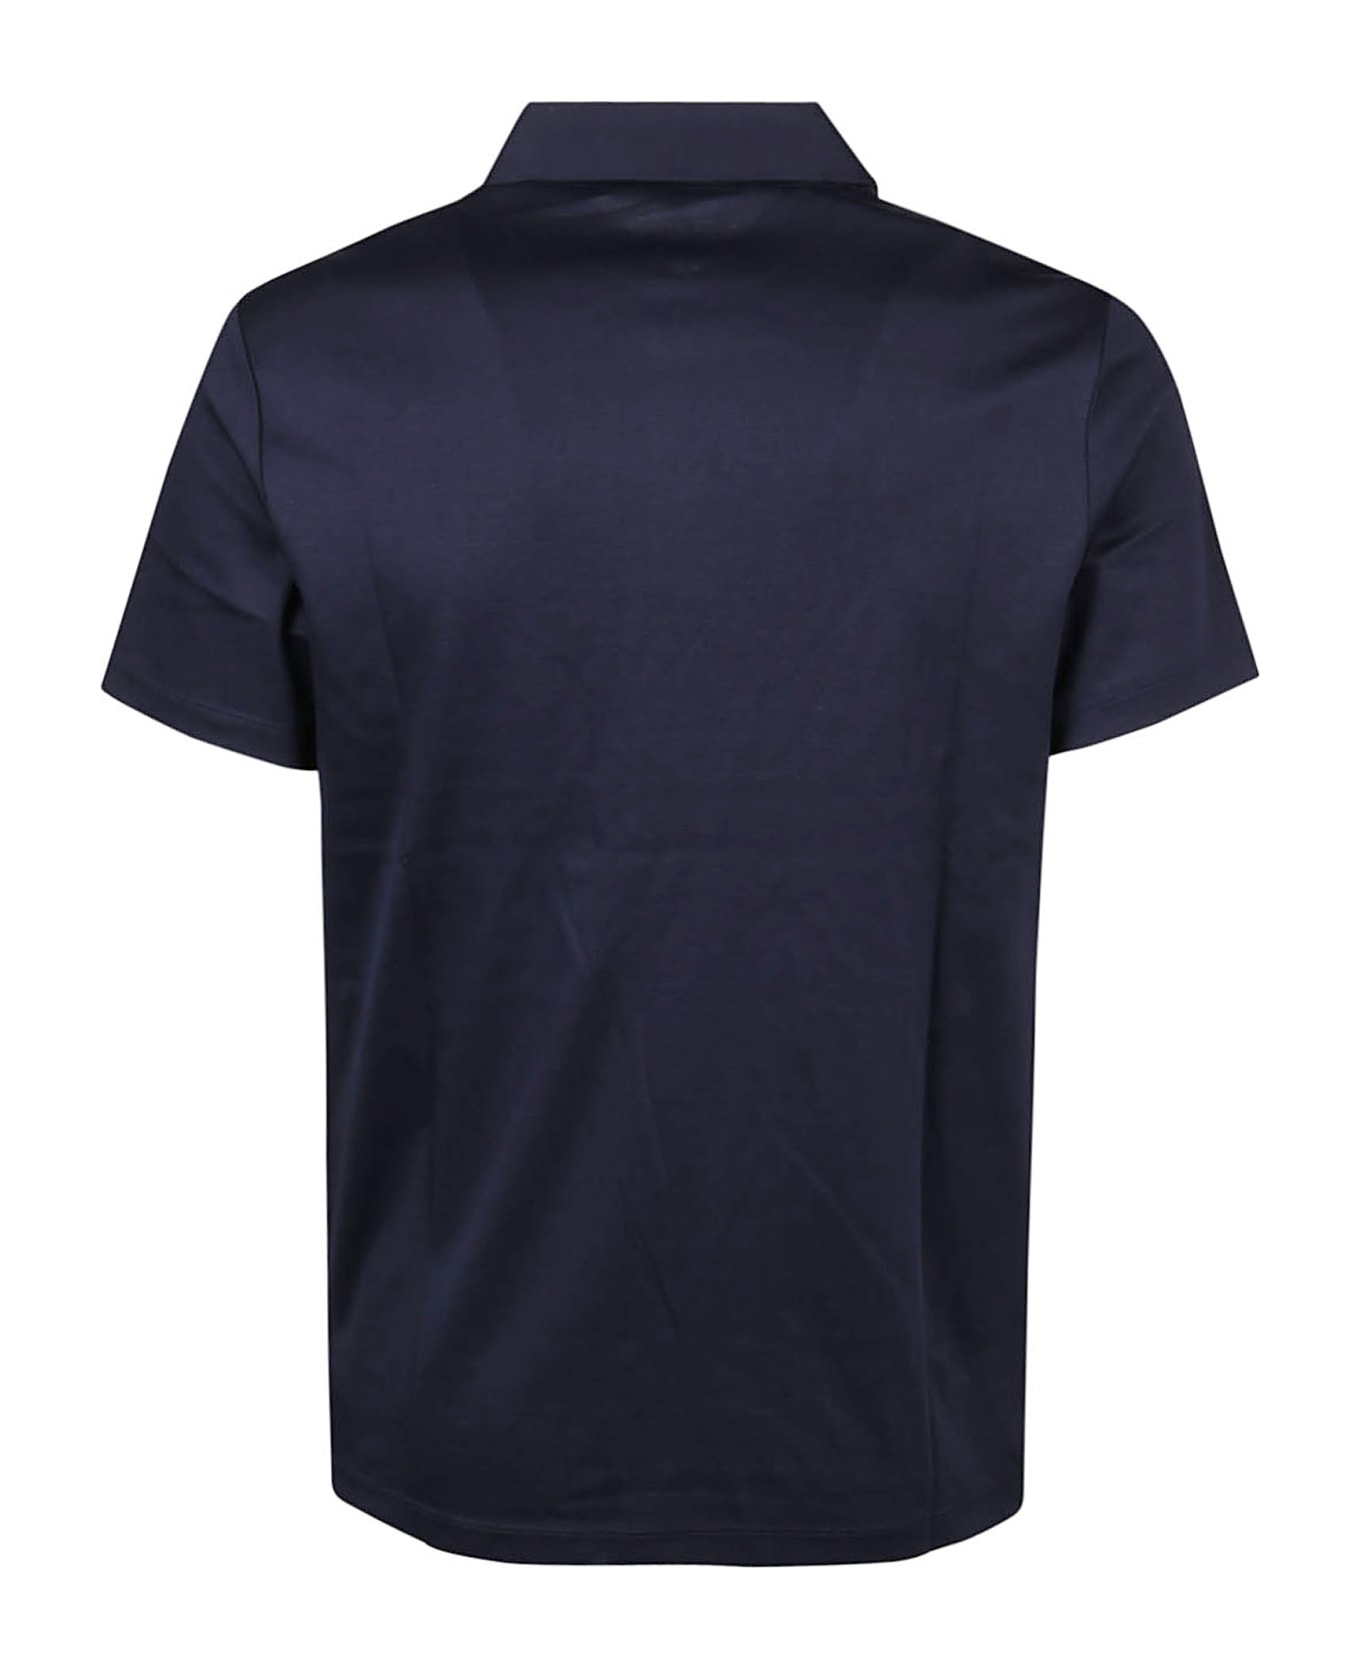 Michael Kors Logo Embroidered Polo Shirt - Midnight